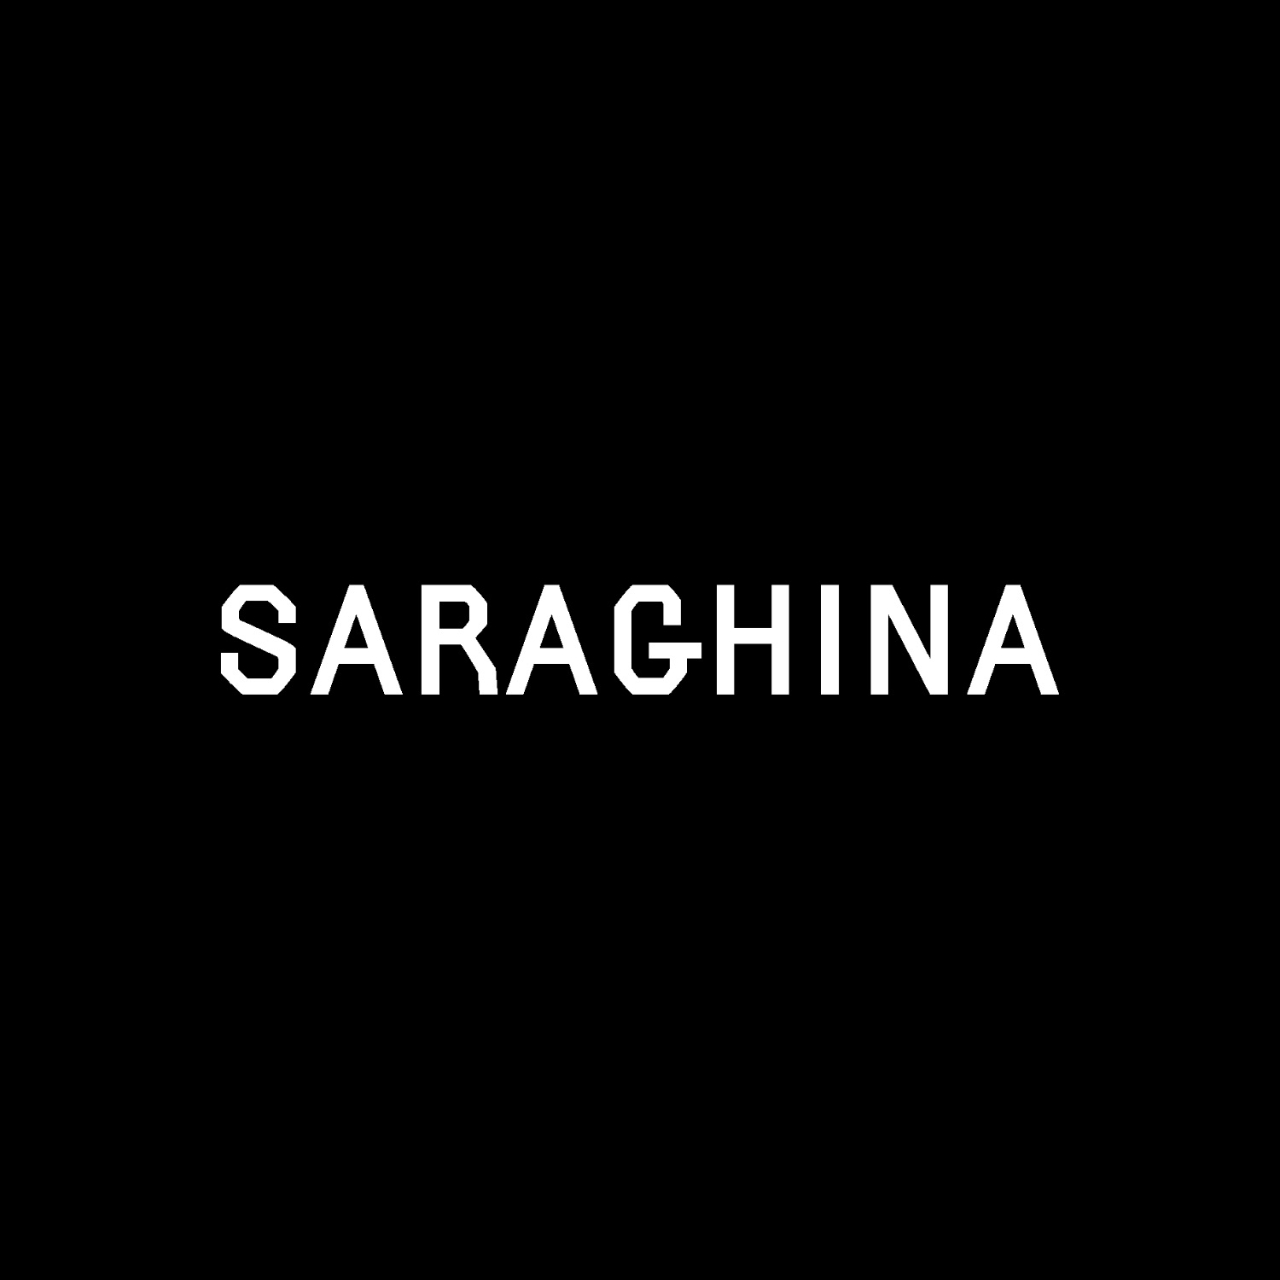 Saraghina logo